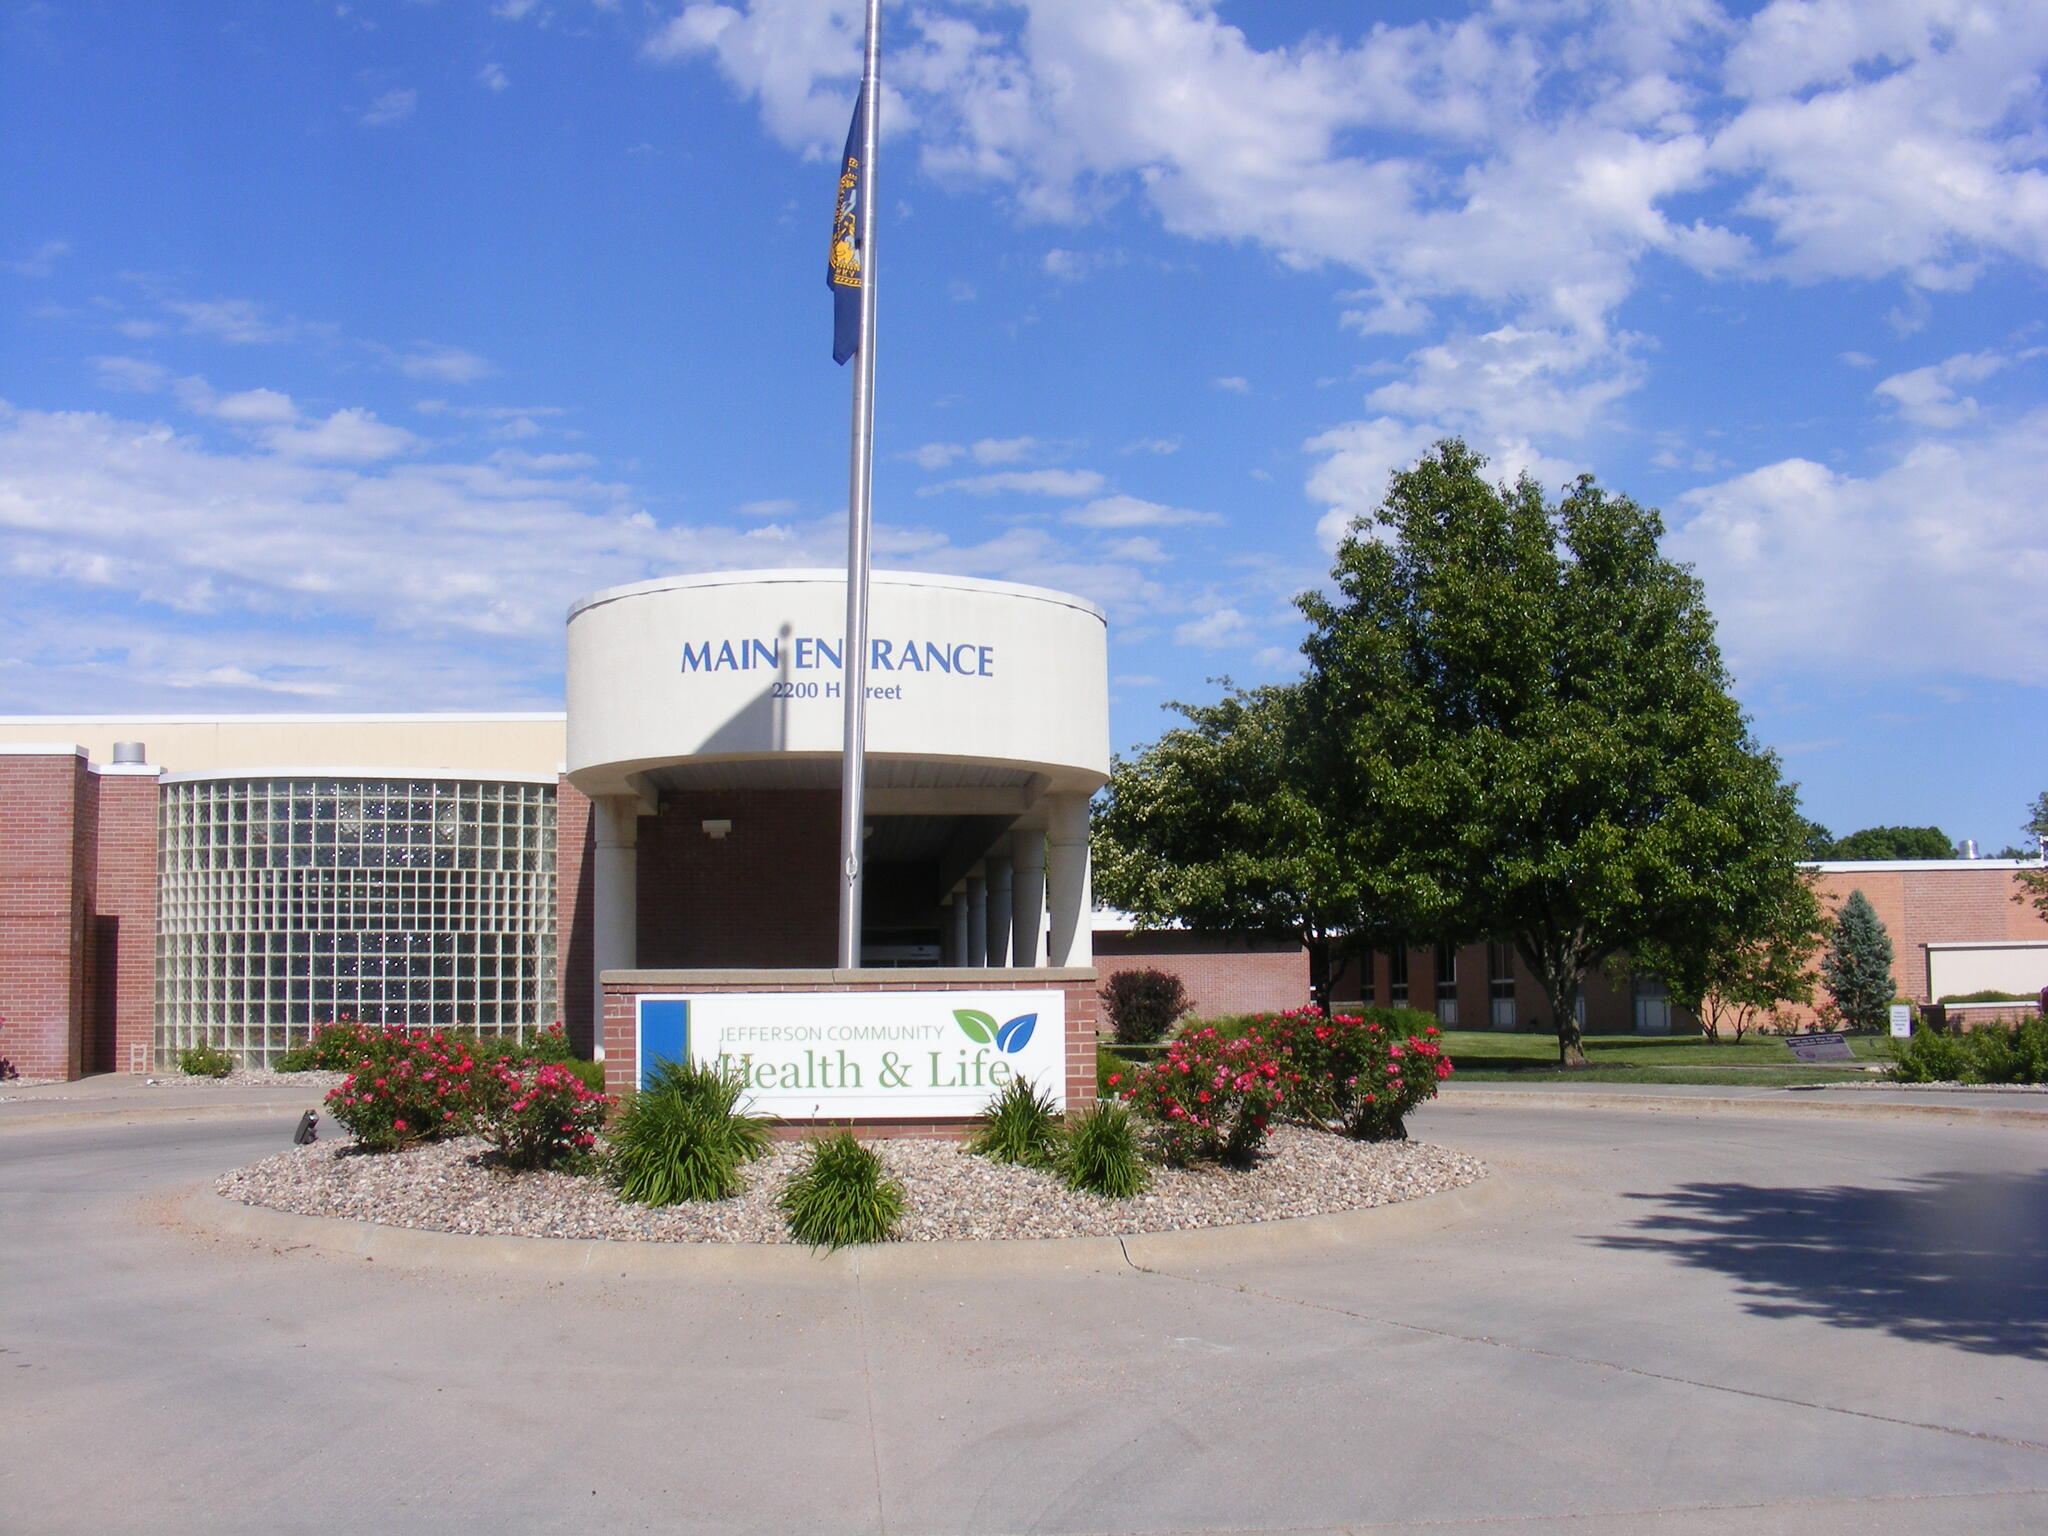 Jefferson Community Health & Life Burkley Fitness Center 2200 H St, Fairbury Nebraska 68352